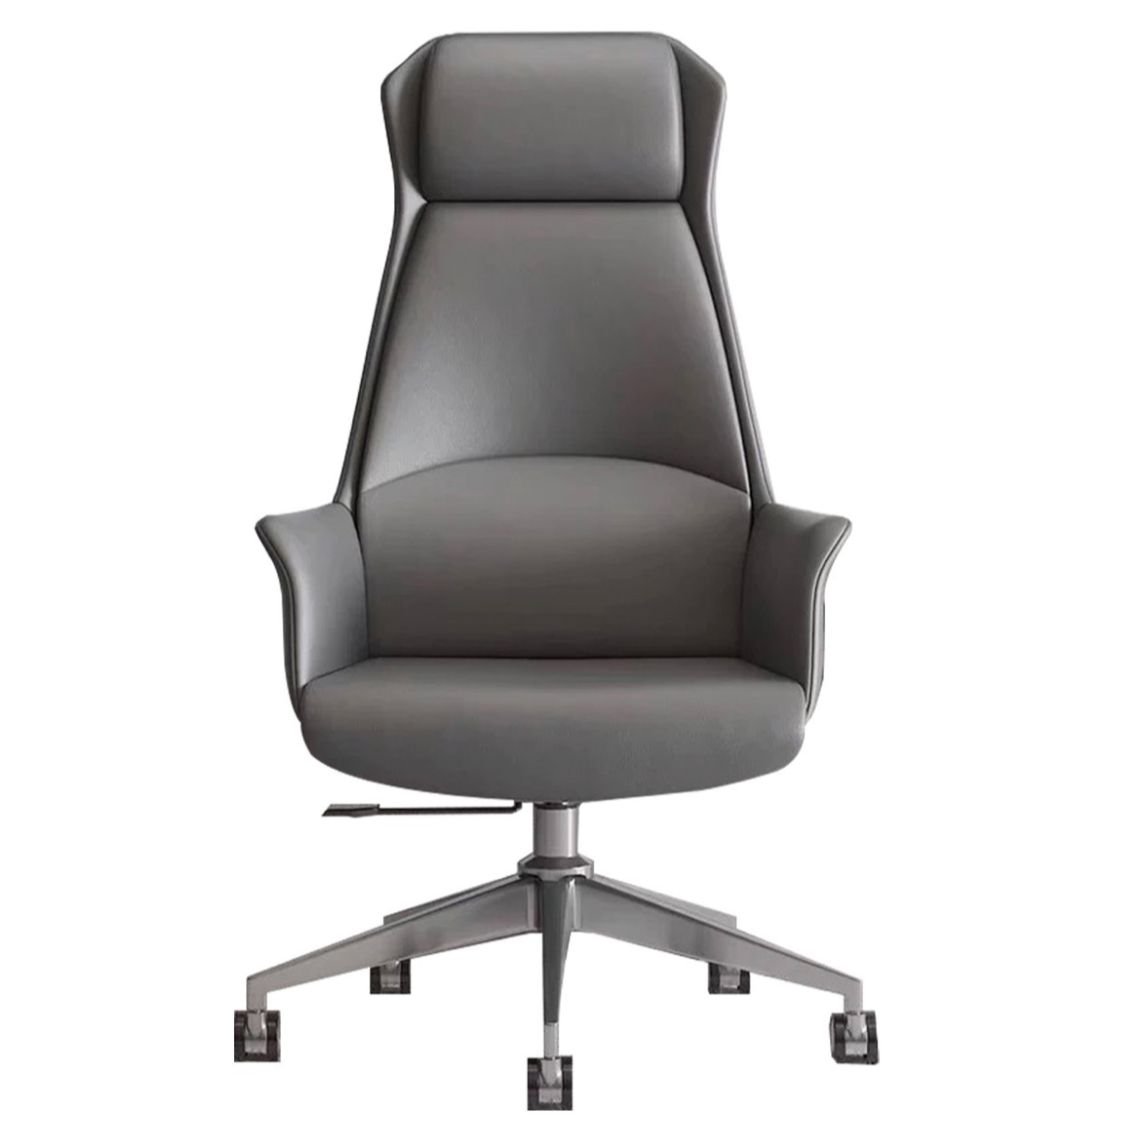 Ergonomic Dove Grey Rawhide Office Furniture with Tilt Available, Headrest, Swivel Wheels, and Armrest, Light Gray, Genuine Leather